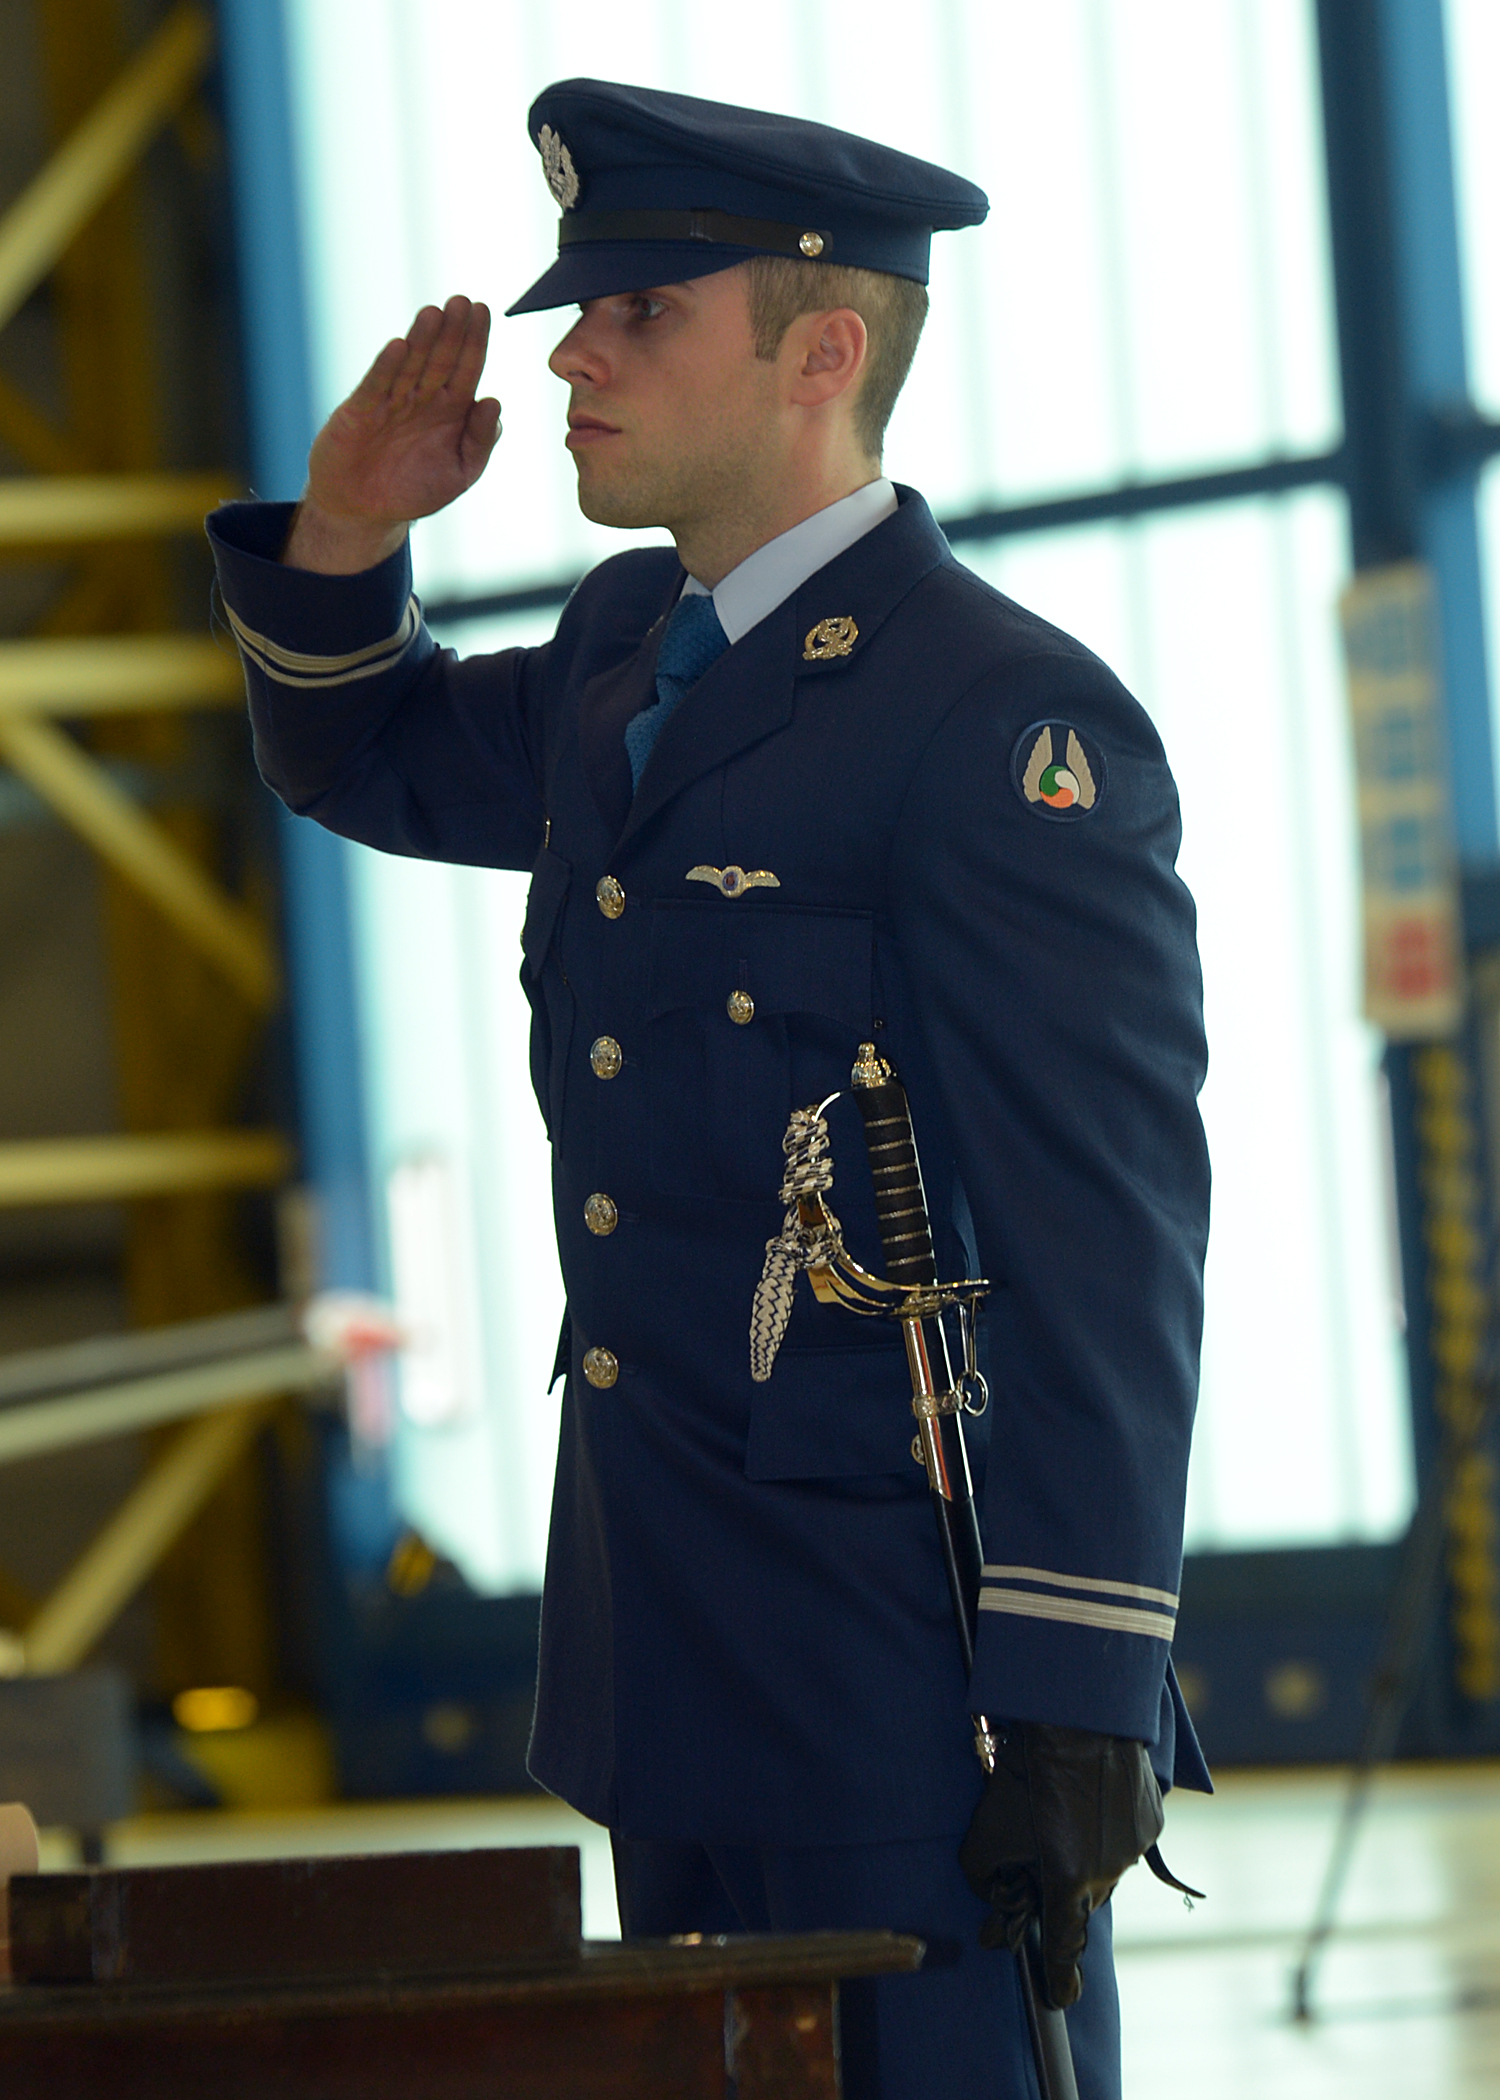 man in uniform saluting at a podium